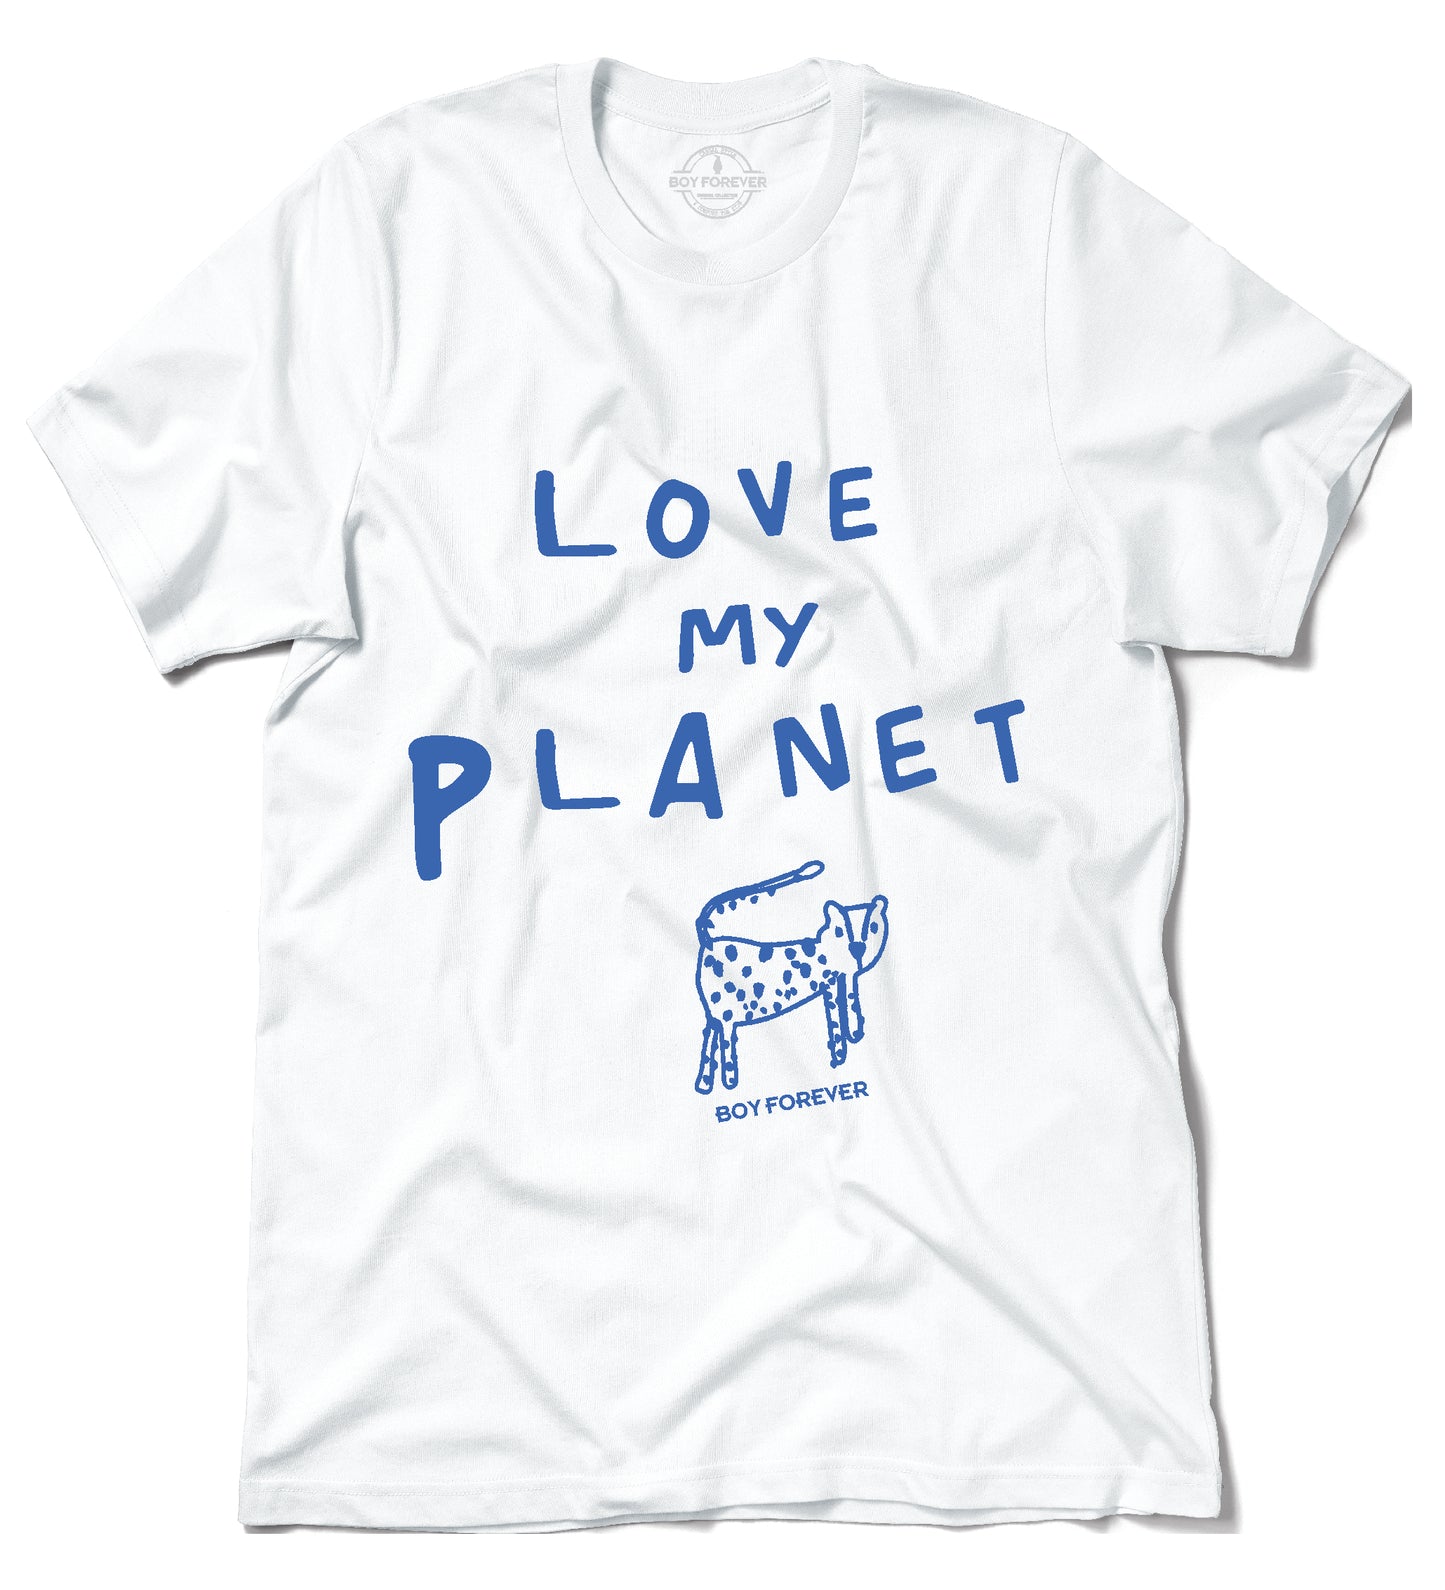 Tee love planet